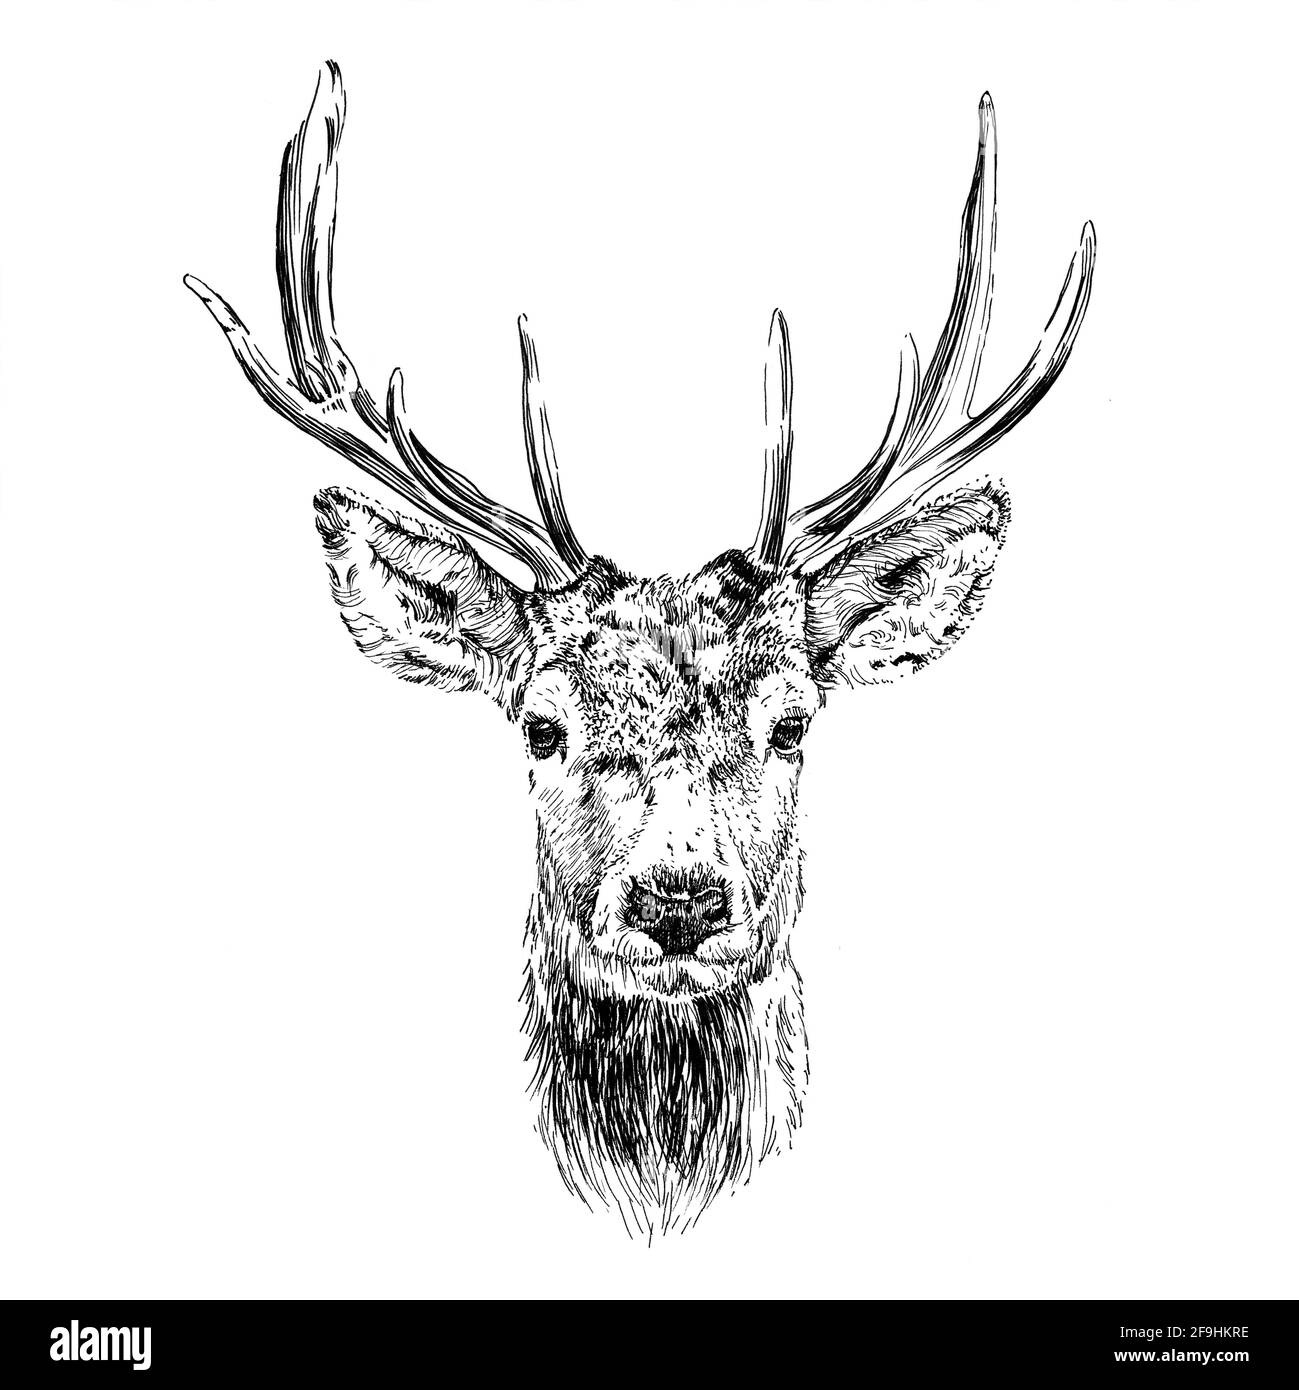 FREE Deer Clipart  Image Download in PDF Illustrator Photoshop EPS  SVG JPG PNG  Templatenet